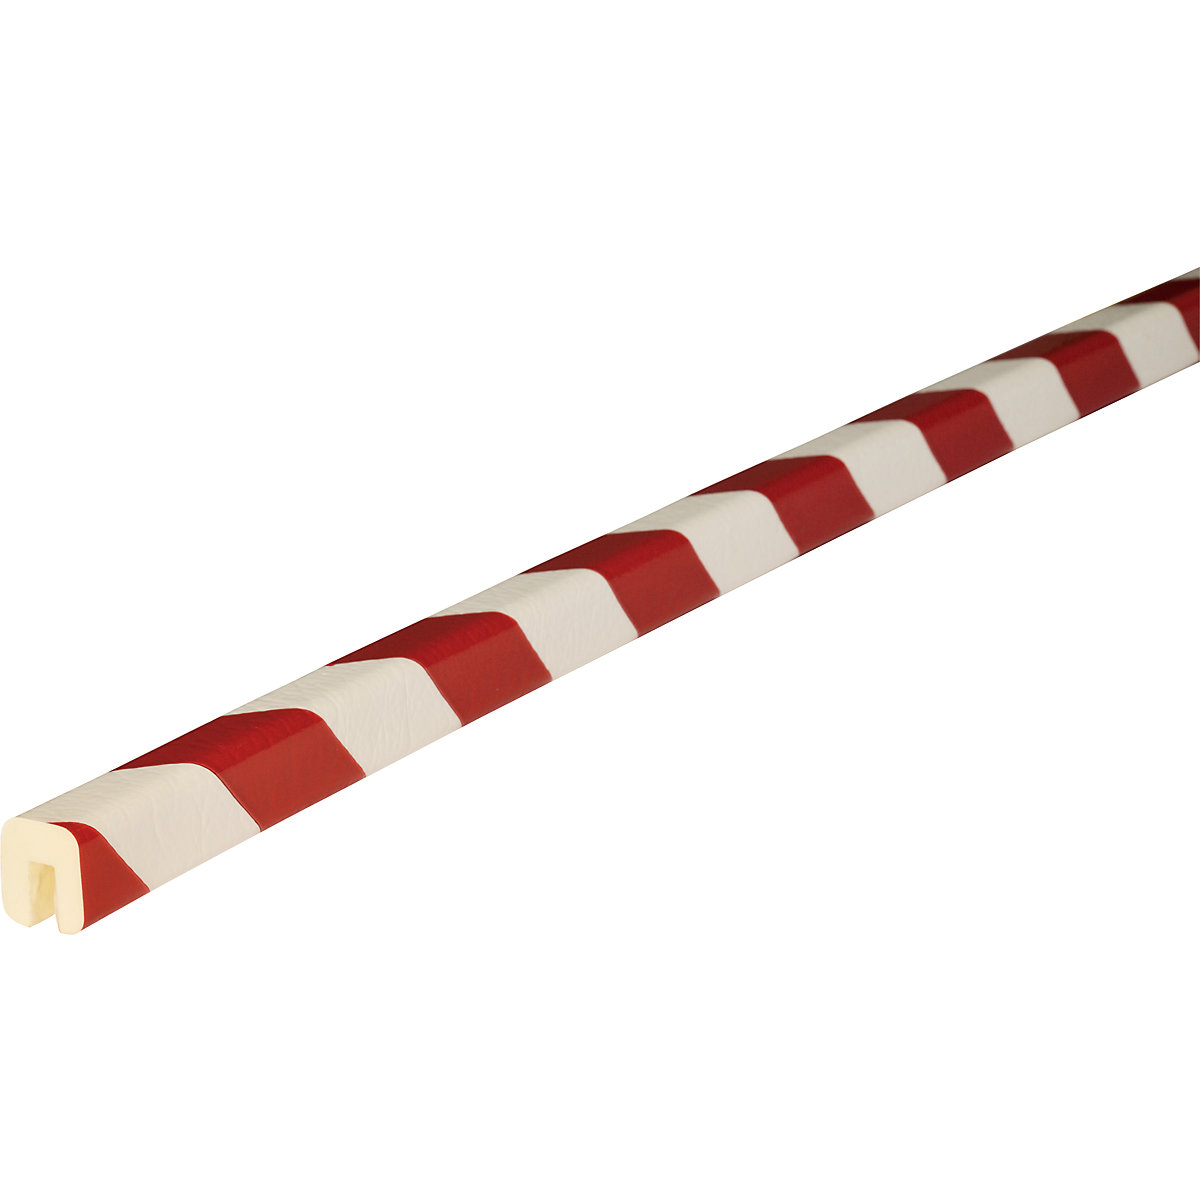 Knuffi®-randbescherming – SHG, type G, 1 rol à 5 m, rood/wit-20